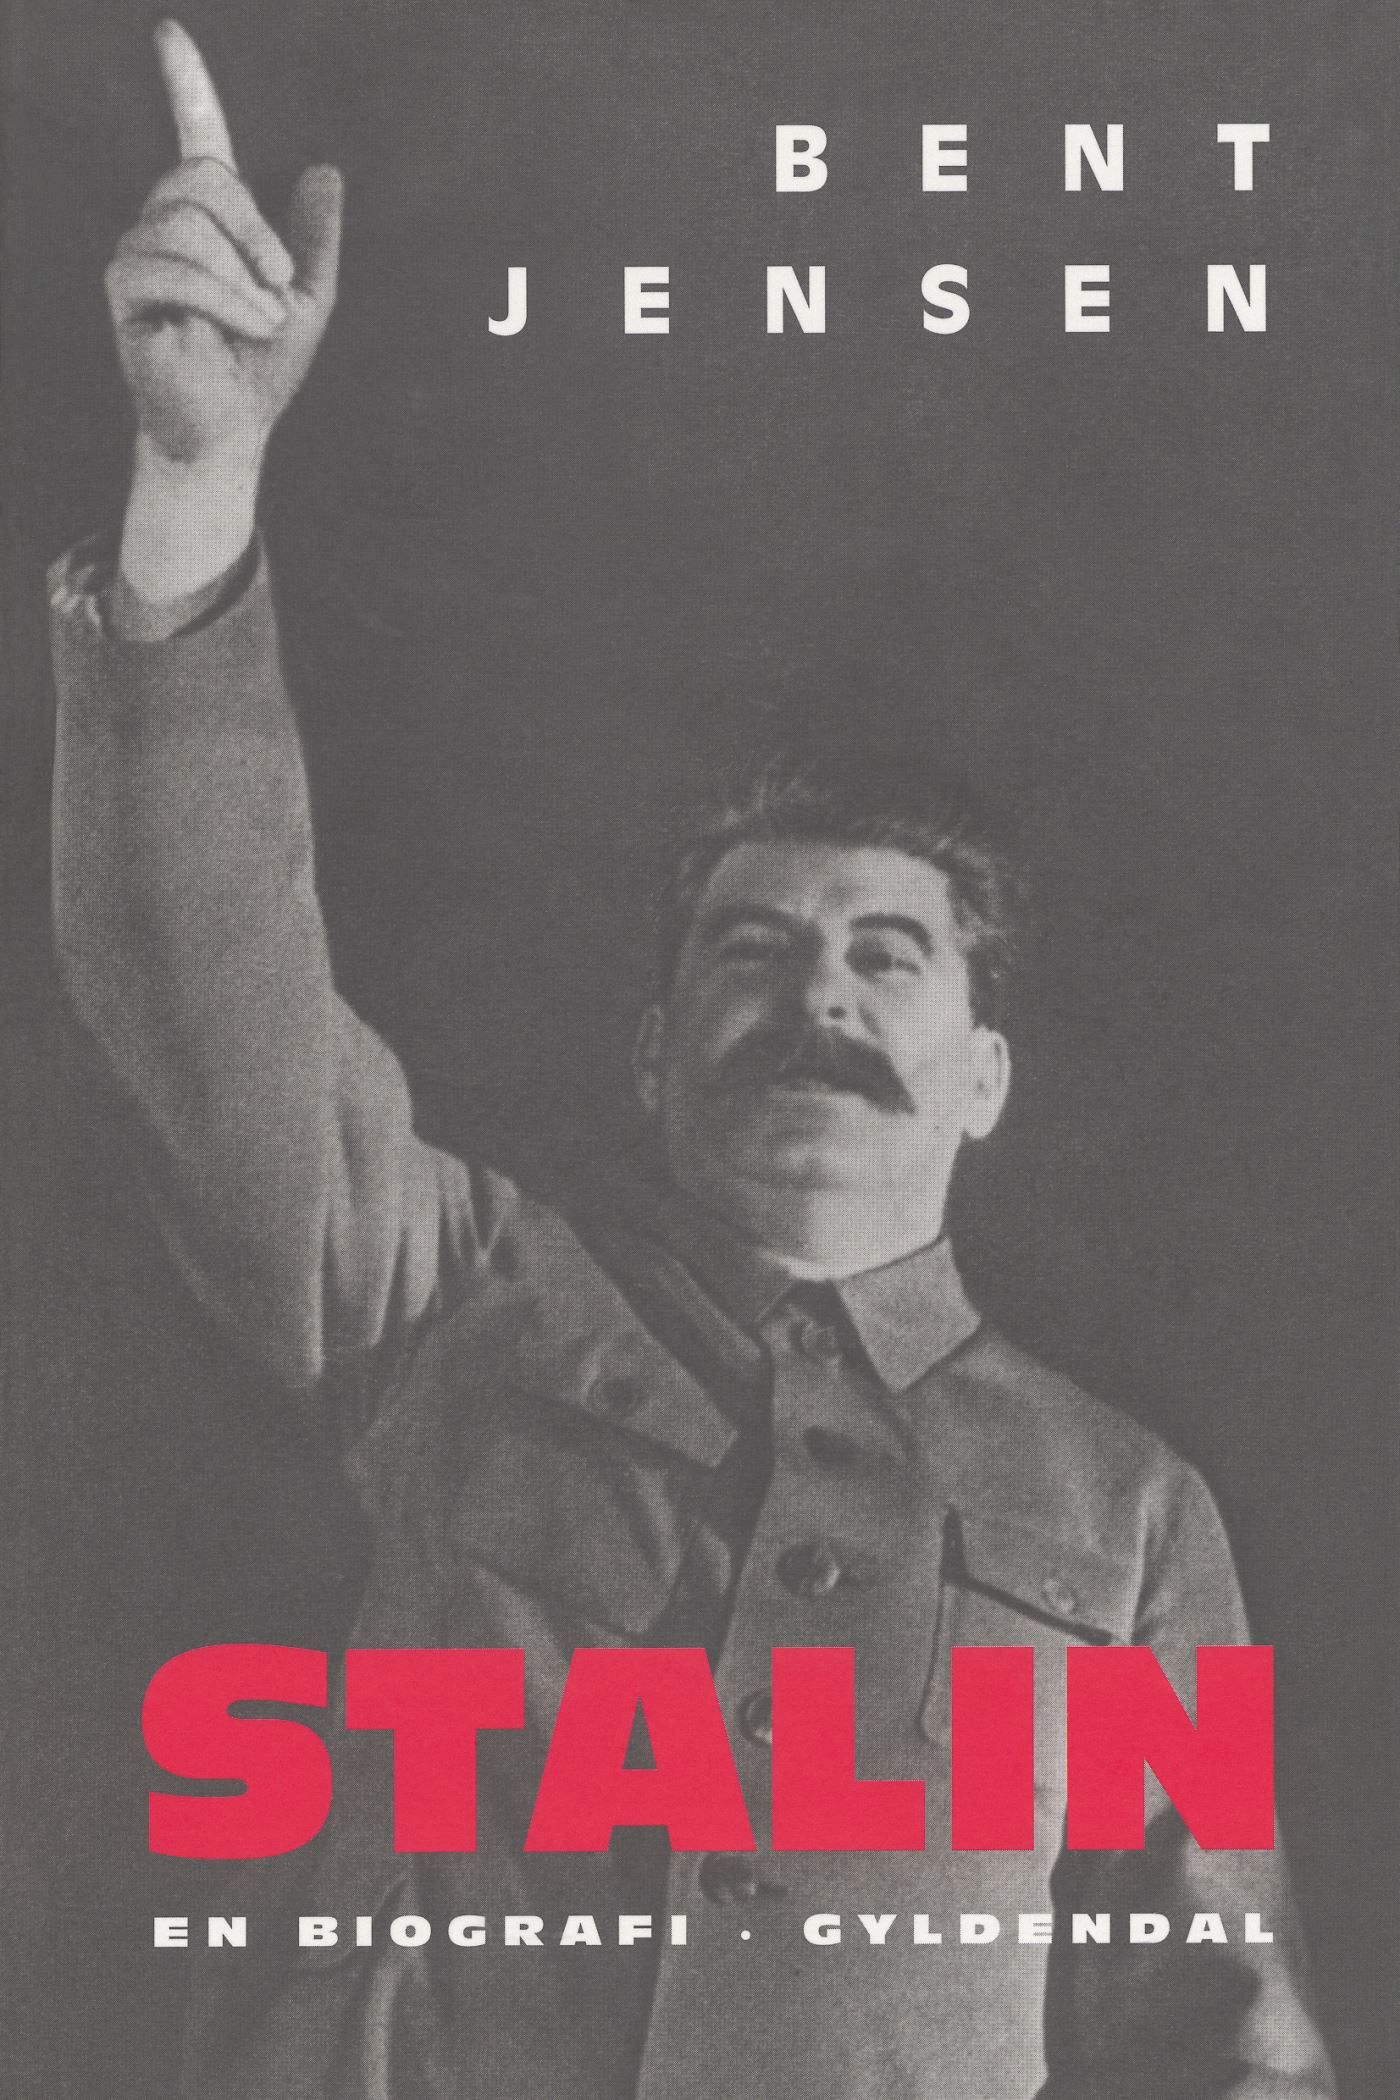 Stalin, eBook by Bent Jensen